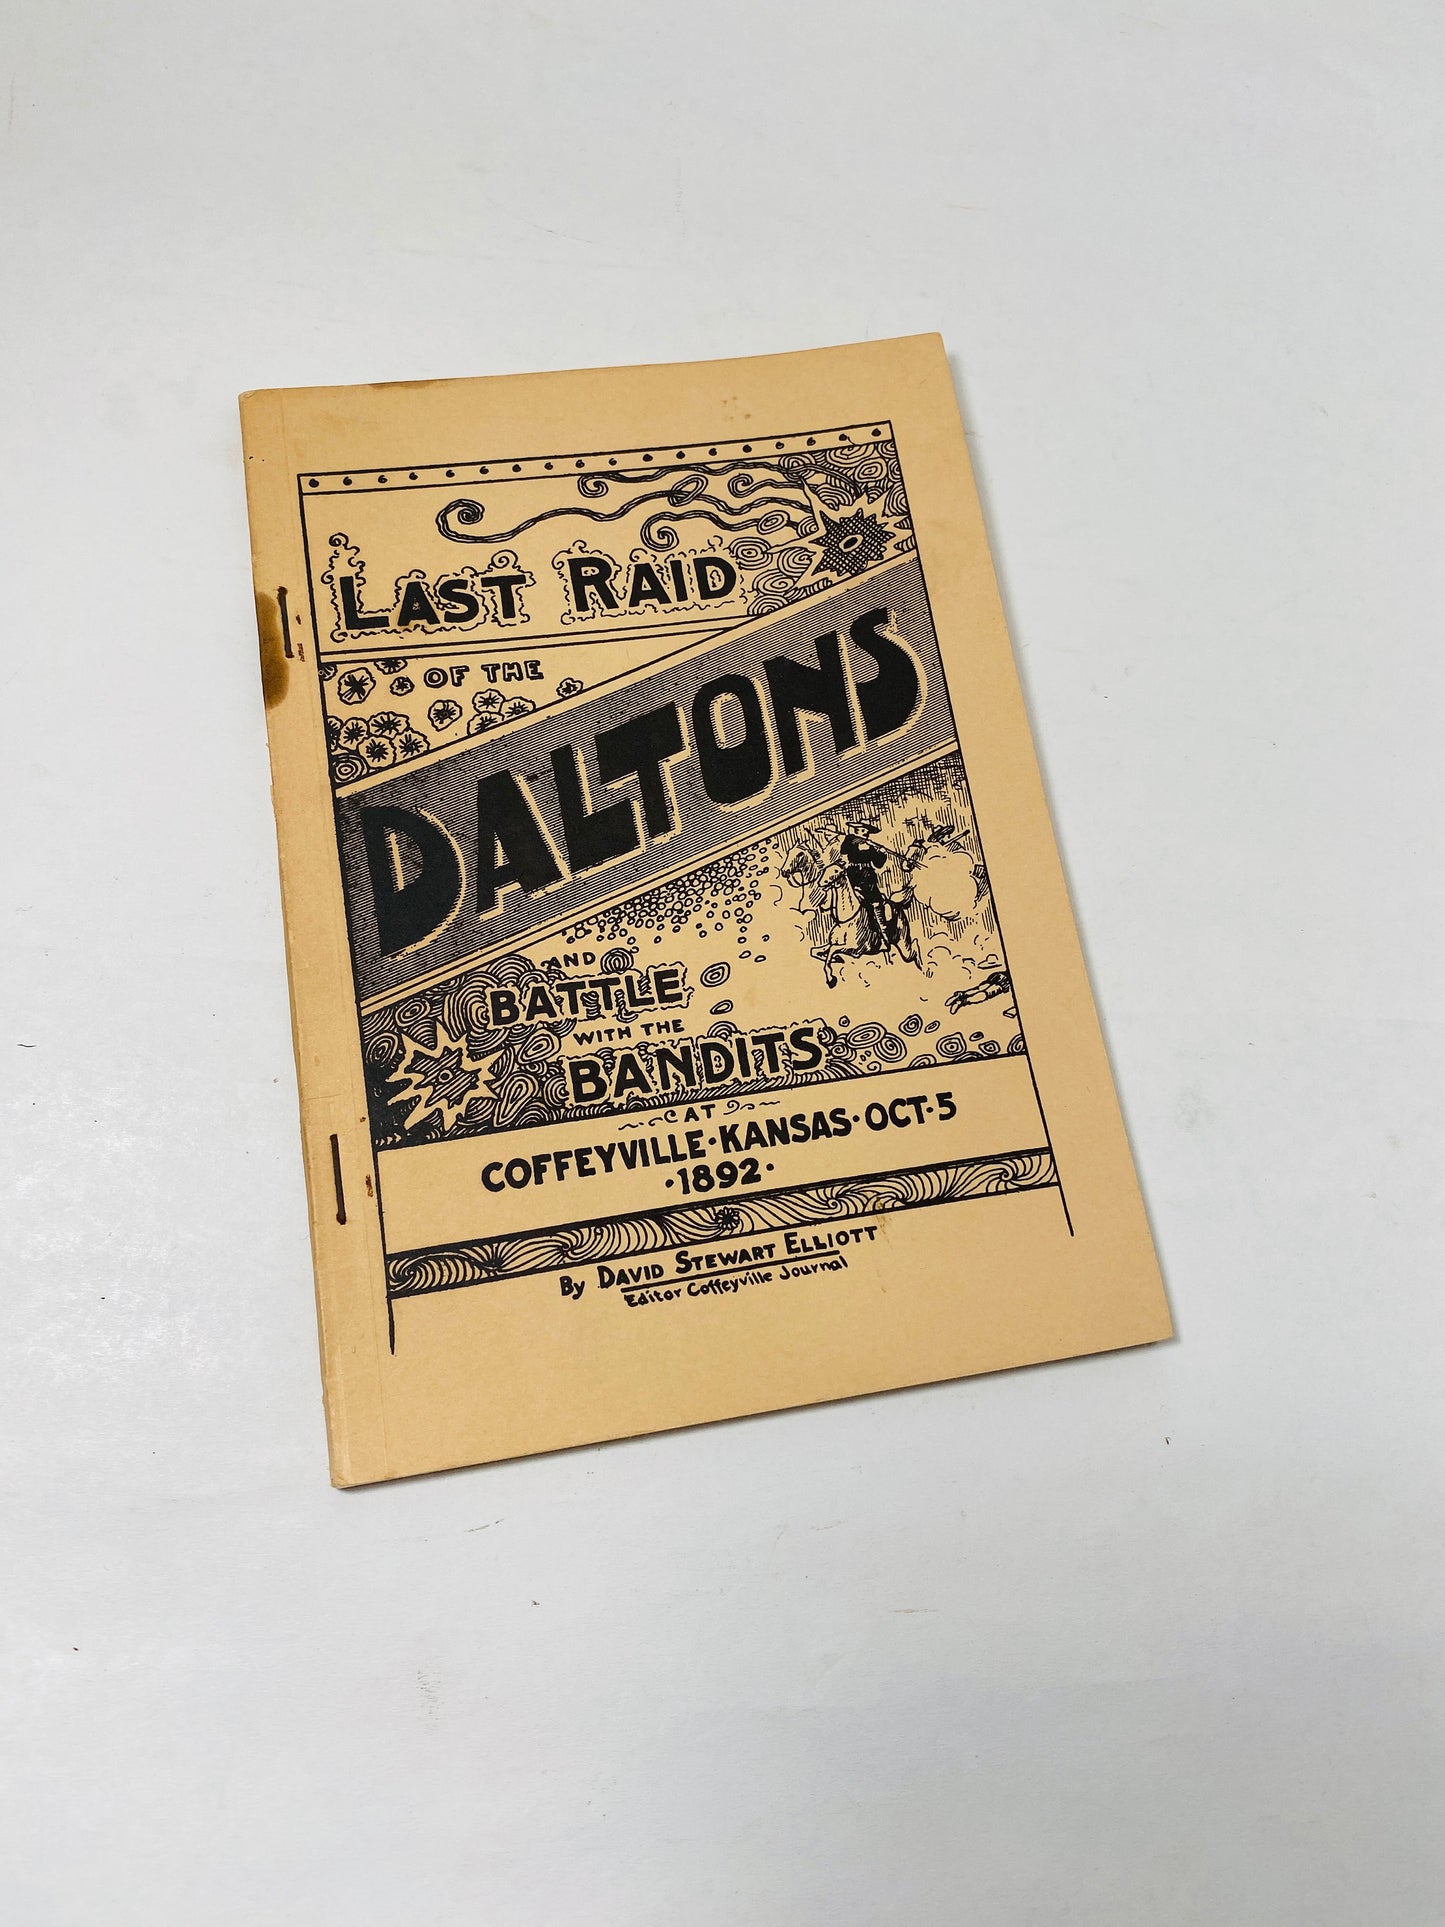 Last Raid of the Dalton’s and Battle of the Bandits vintage paperback booklet Coffeyville Kansas 1892 David Stewart Elliot Historical Museum